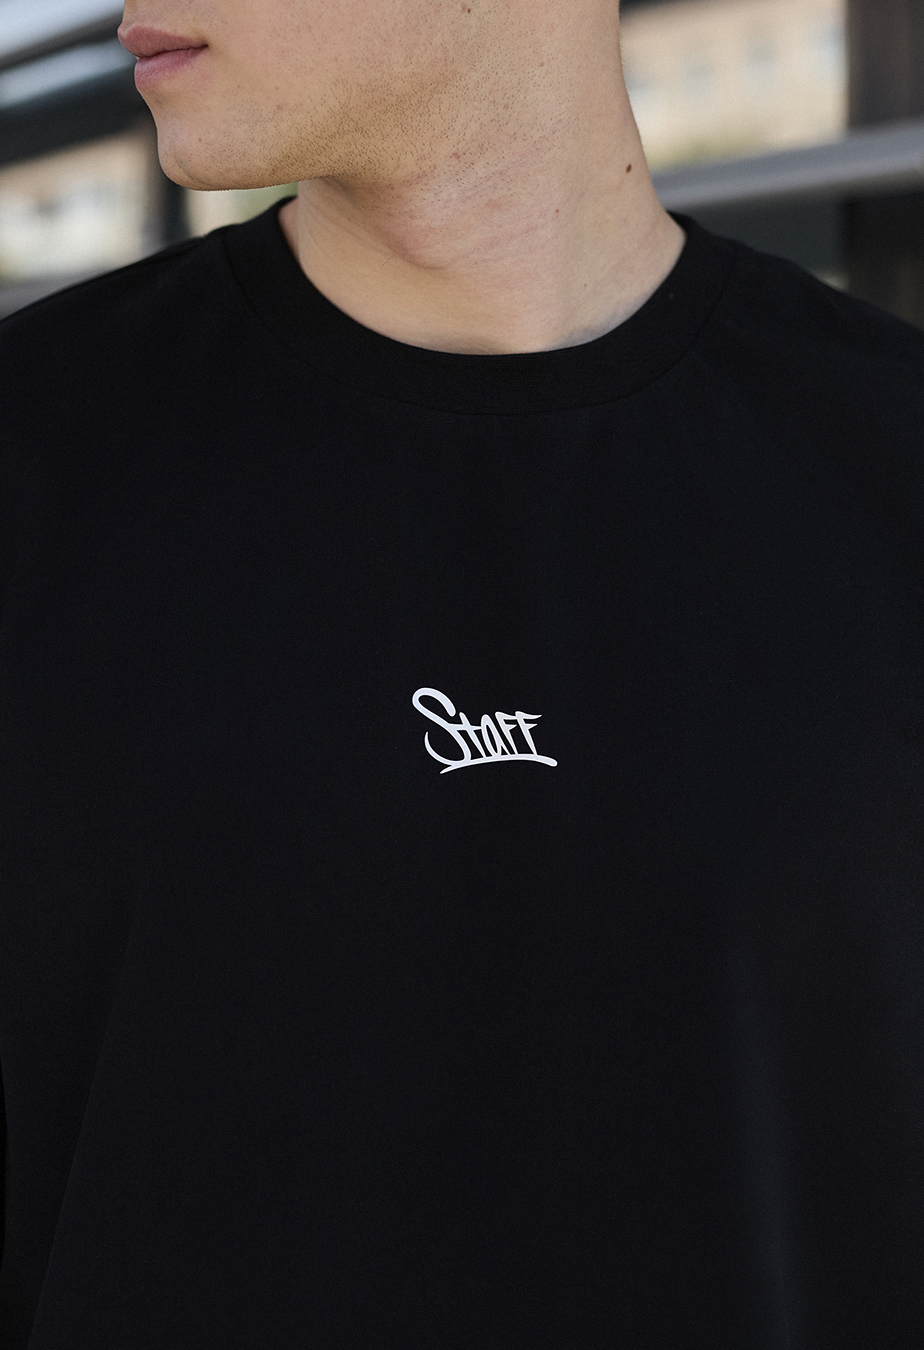 Koszulka Staff black logo oversize